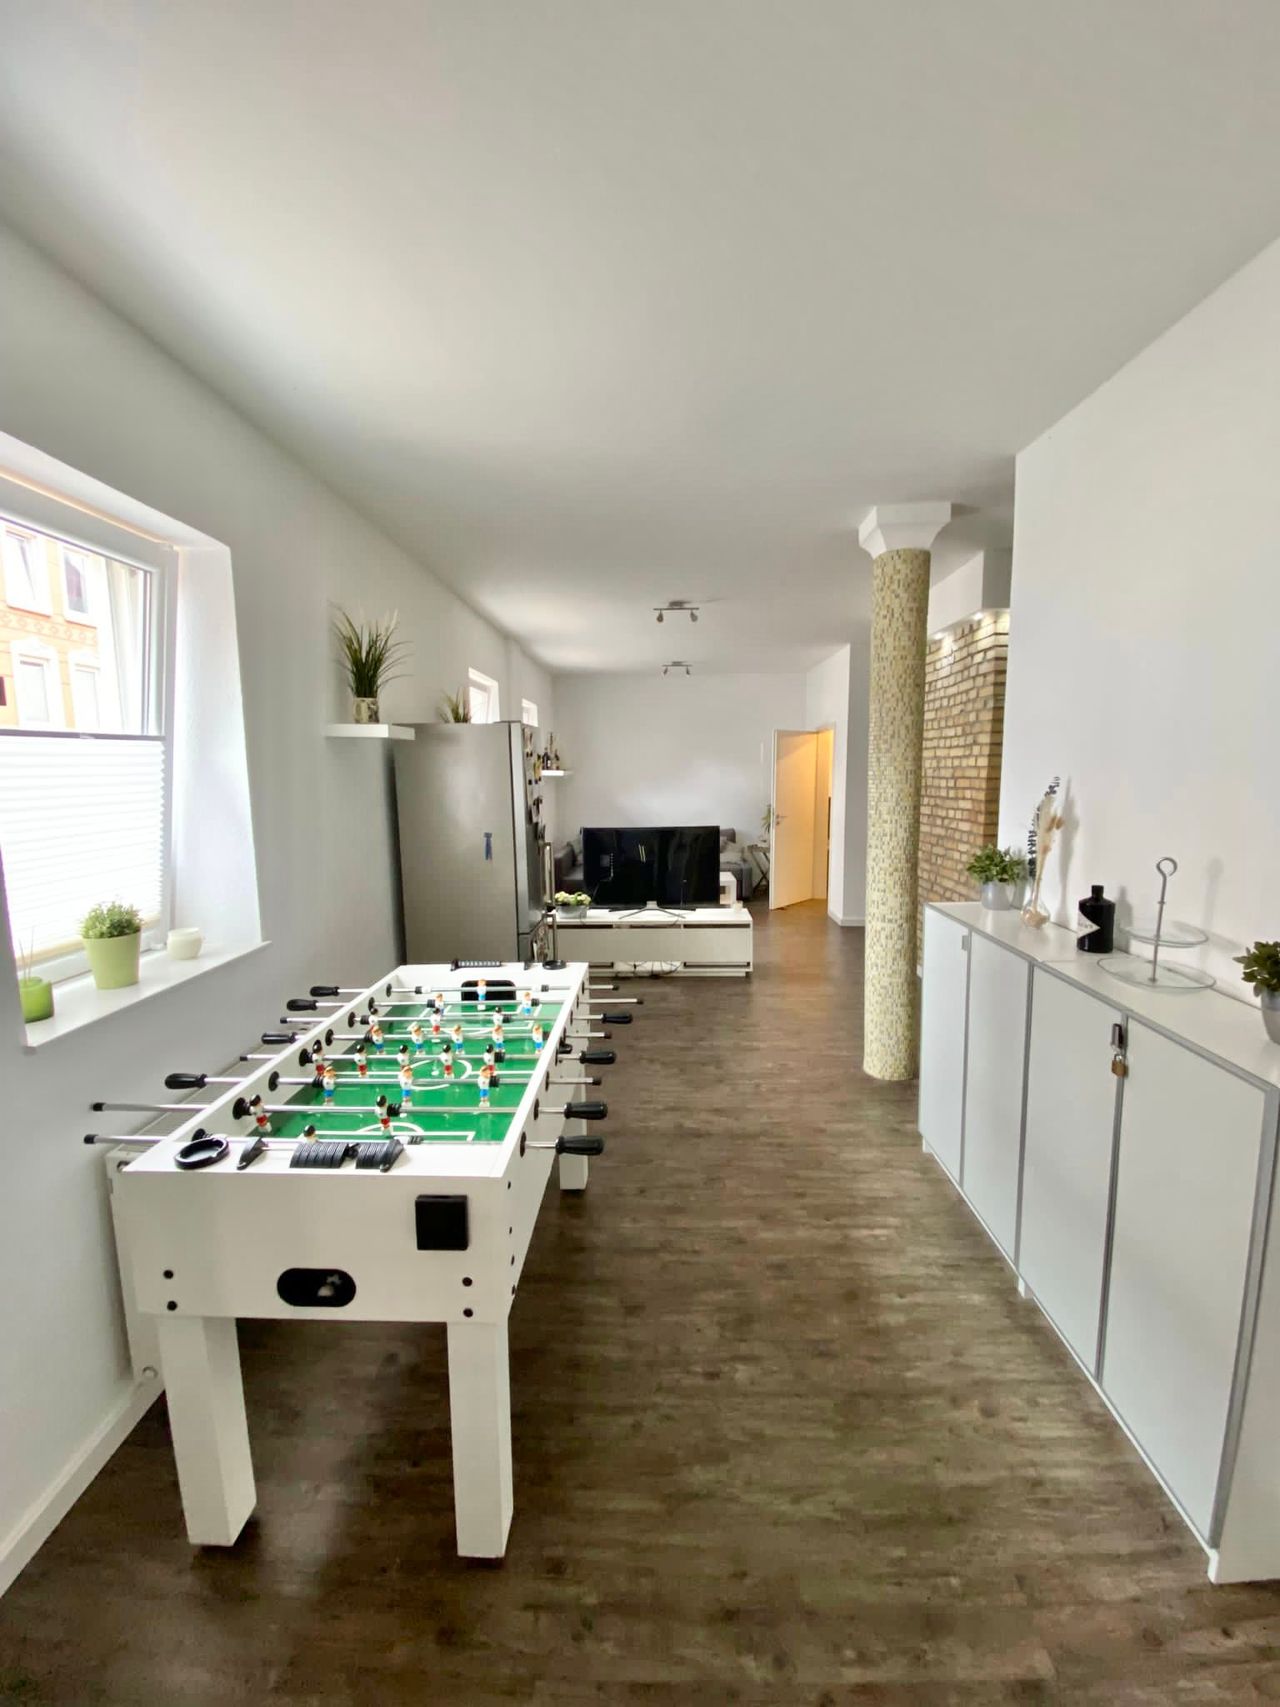 Exclusive, modernized 2-room apartment in a former corner pub in a central location in Kiel